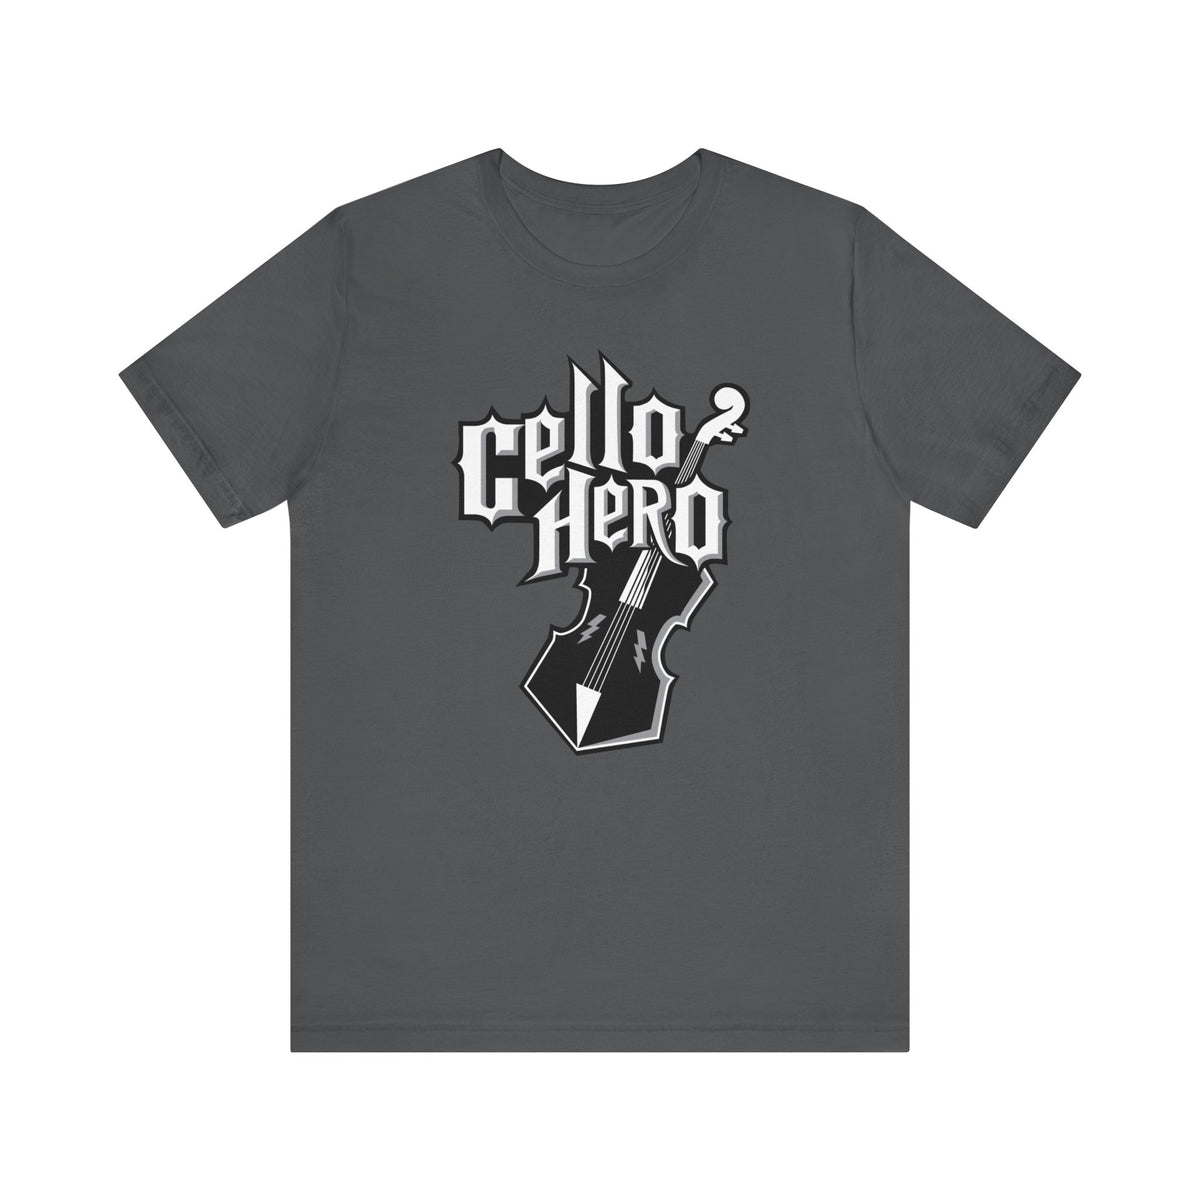 Cello Hero - Men's T-Shirt